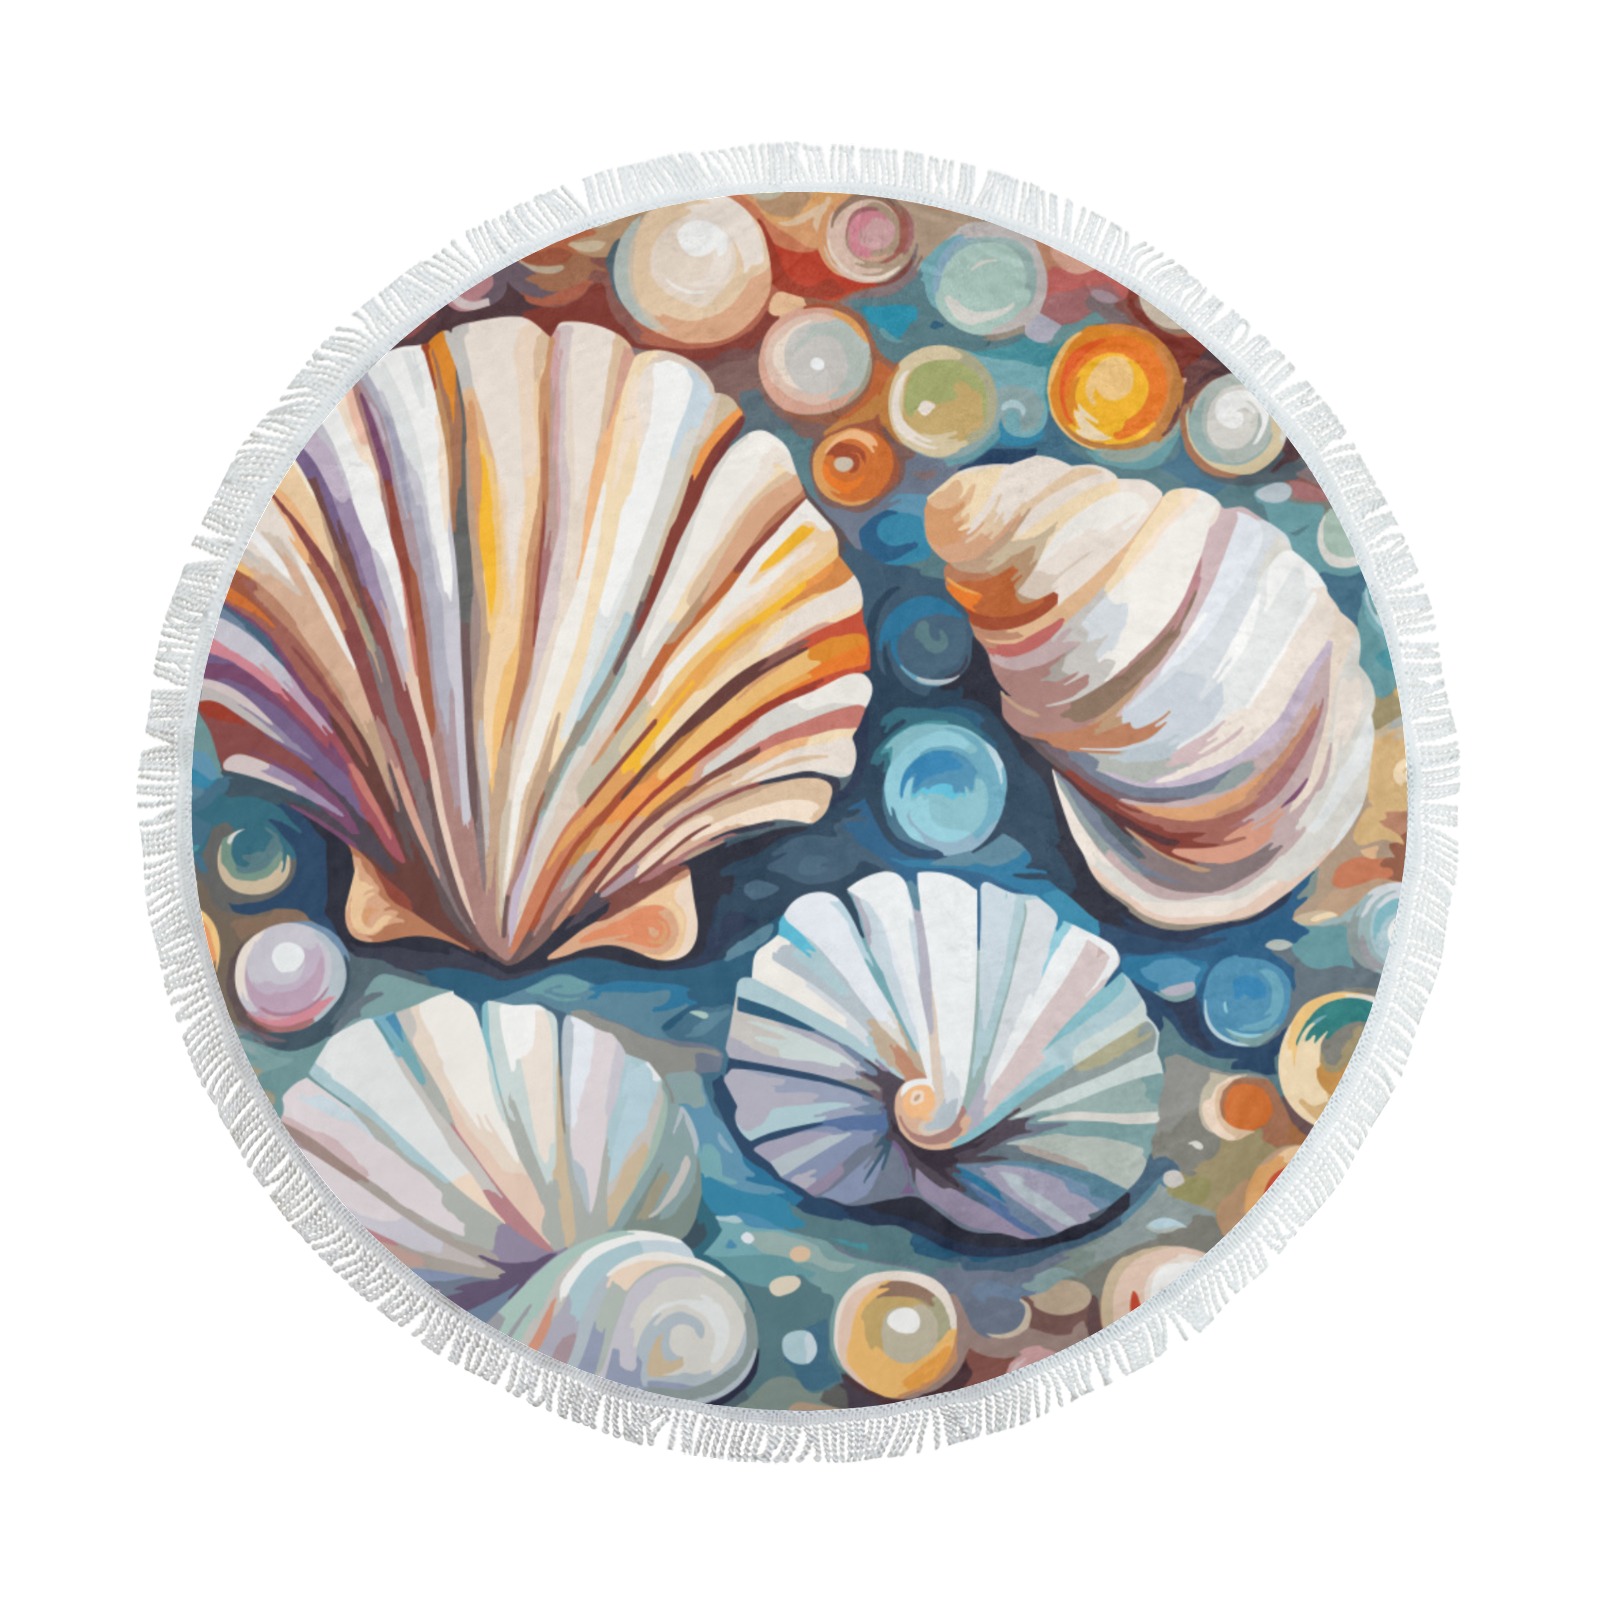 Fantasy shells, conches, pearls, colorful art. Circular Beach Shawl Towel 59"x 59"